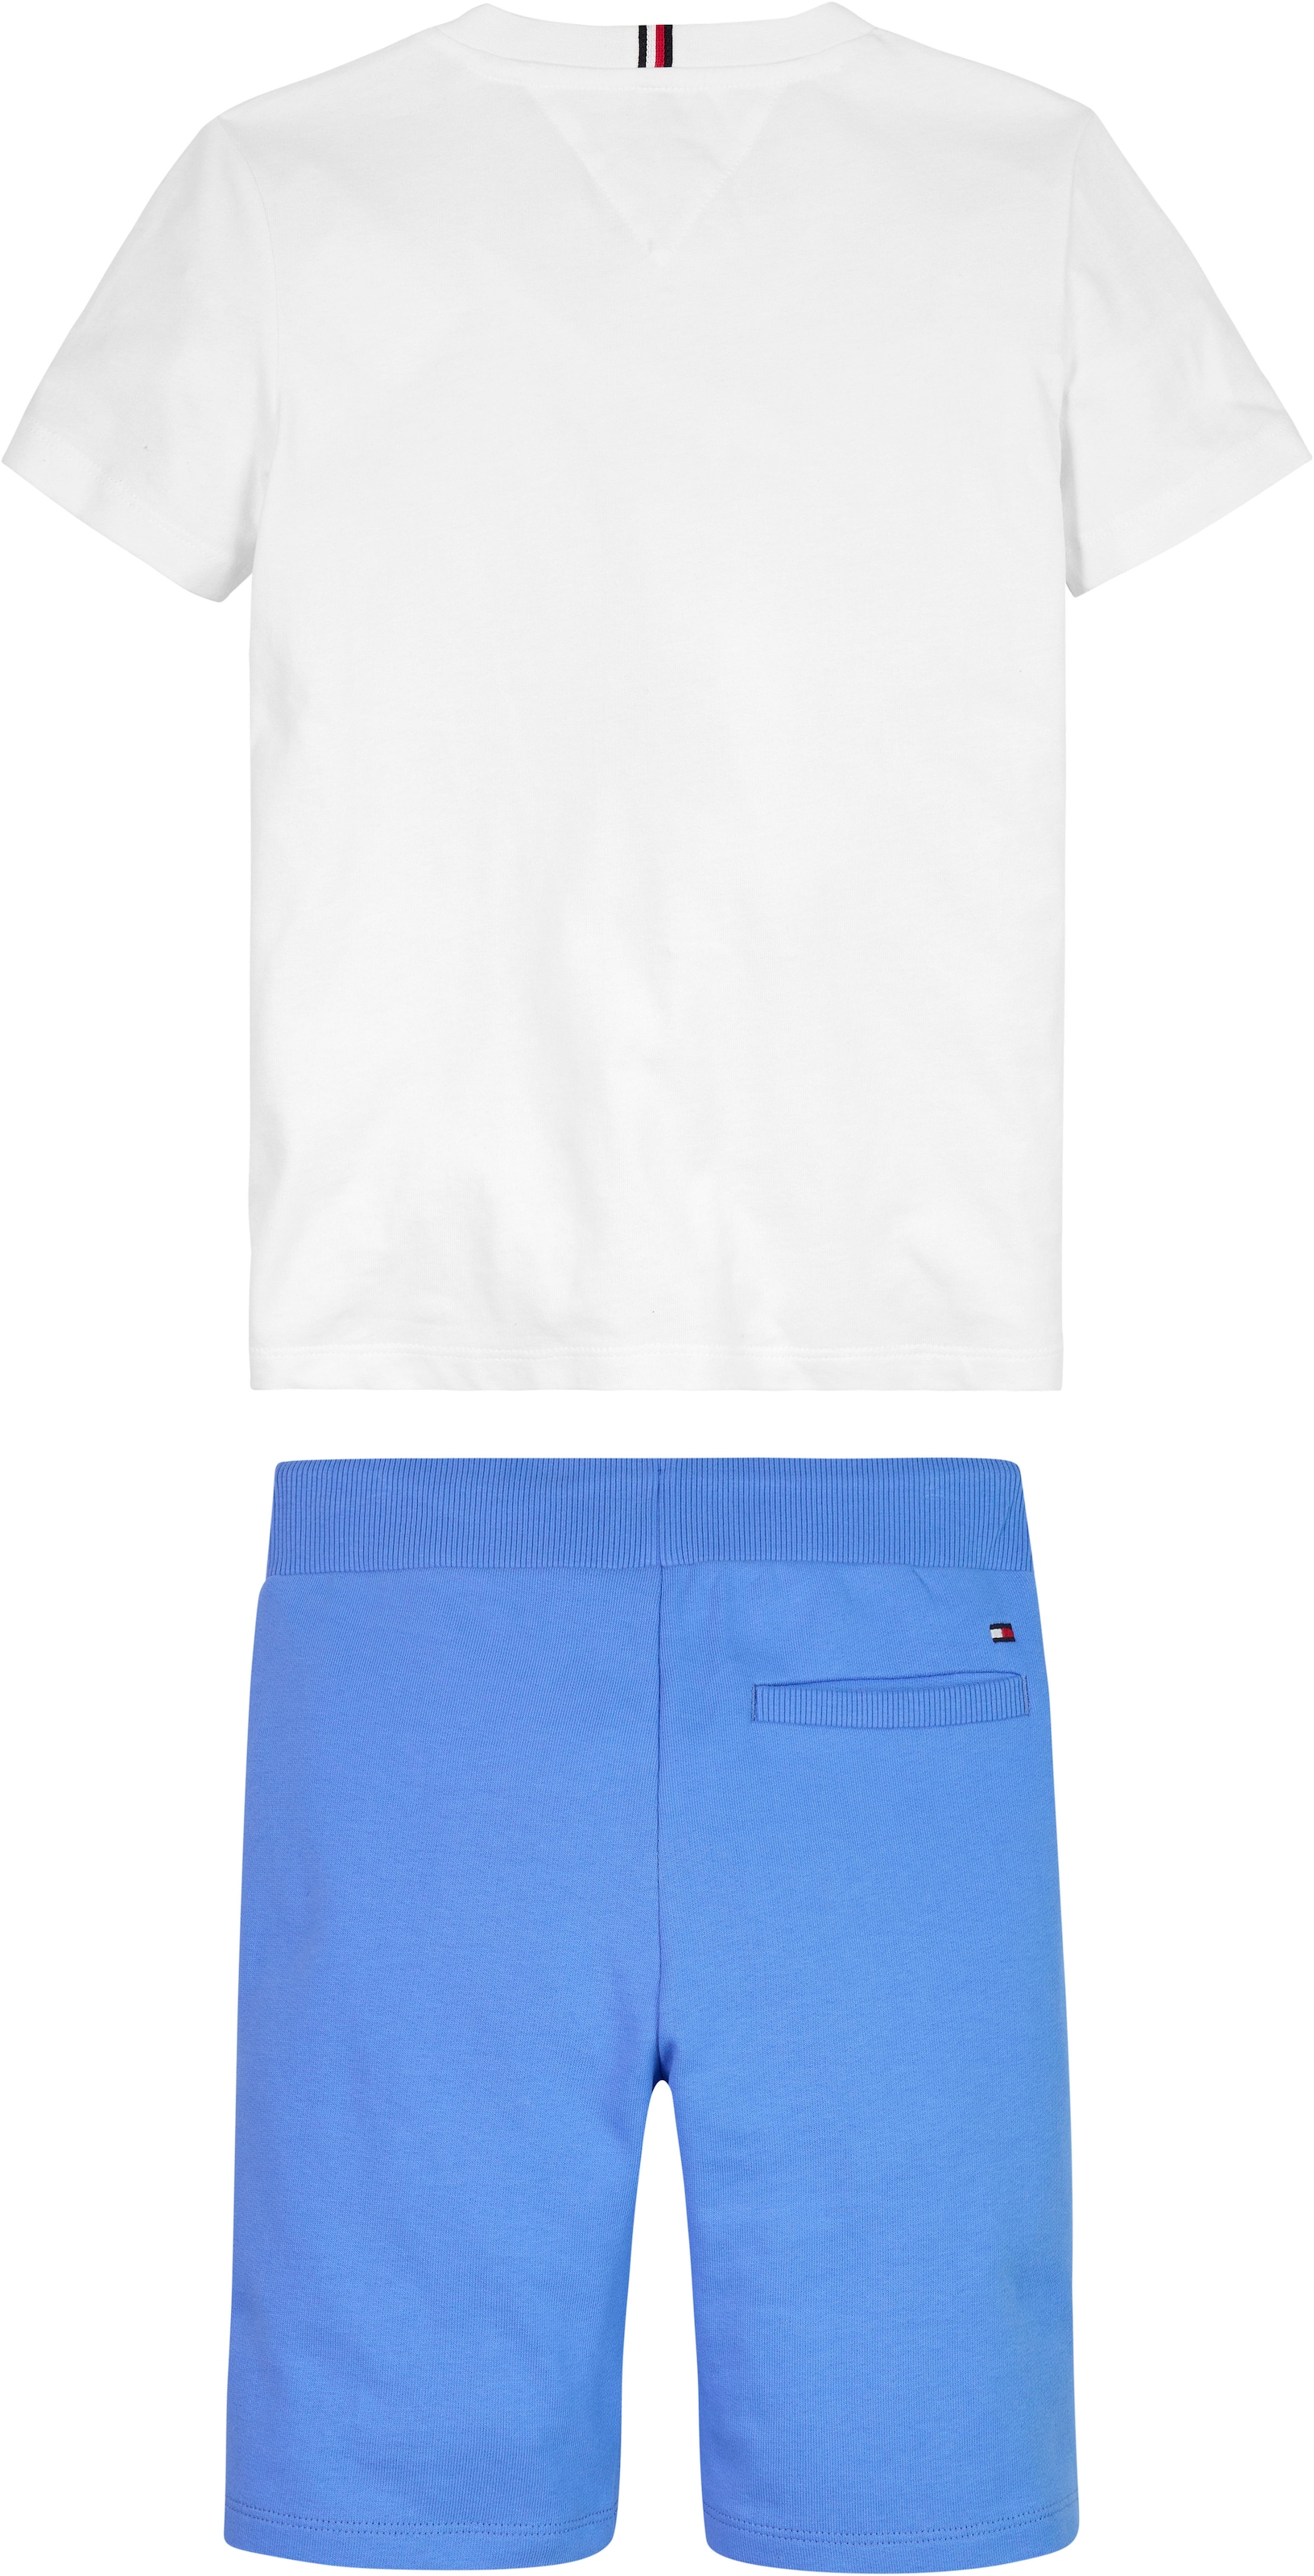 Tommy Hilfiger Shirt & Shorts »ESSENTIAL SET«, Kinder bis 16 Jahre, Shirt + Shorts